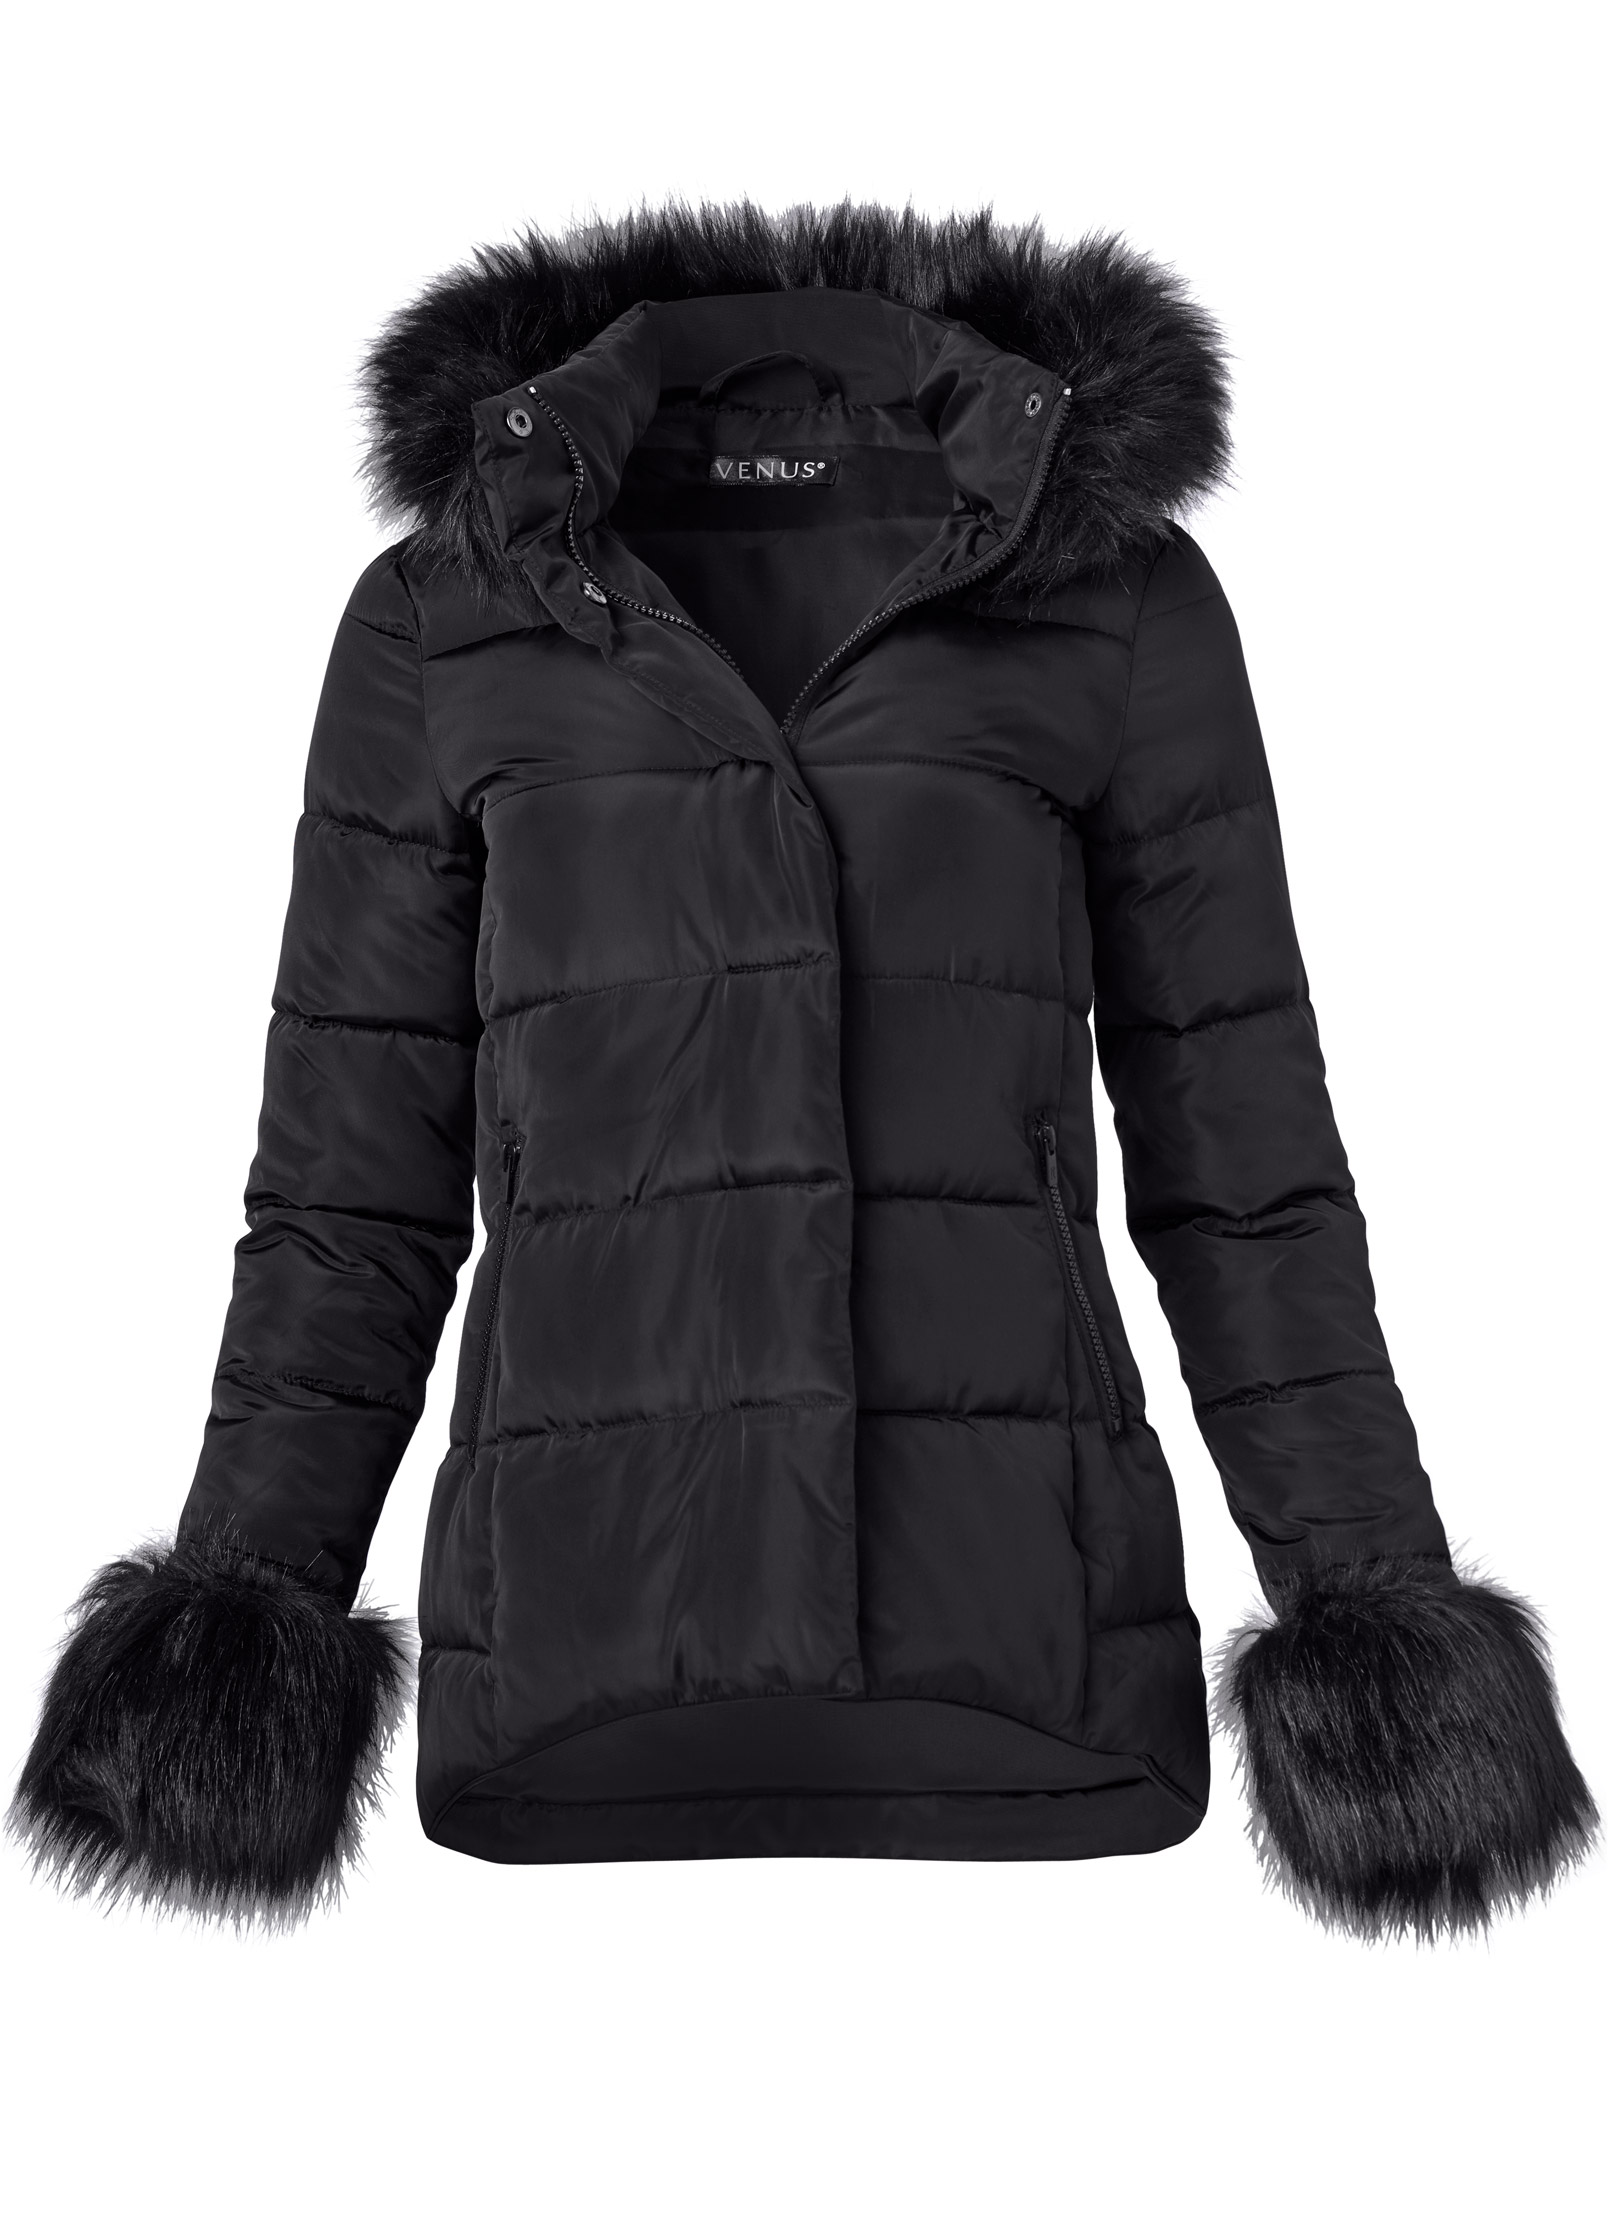 Faux-Fur Trim Puffer Jacket in Black | VENUS